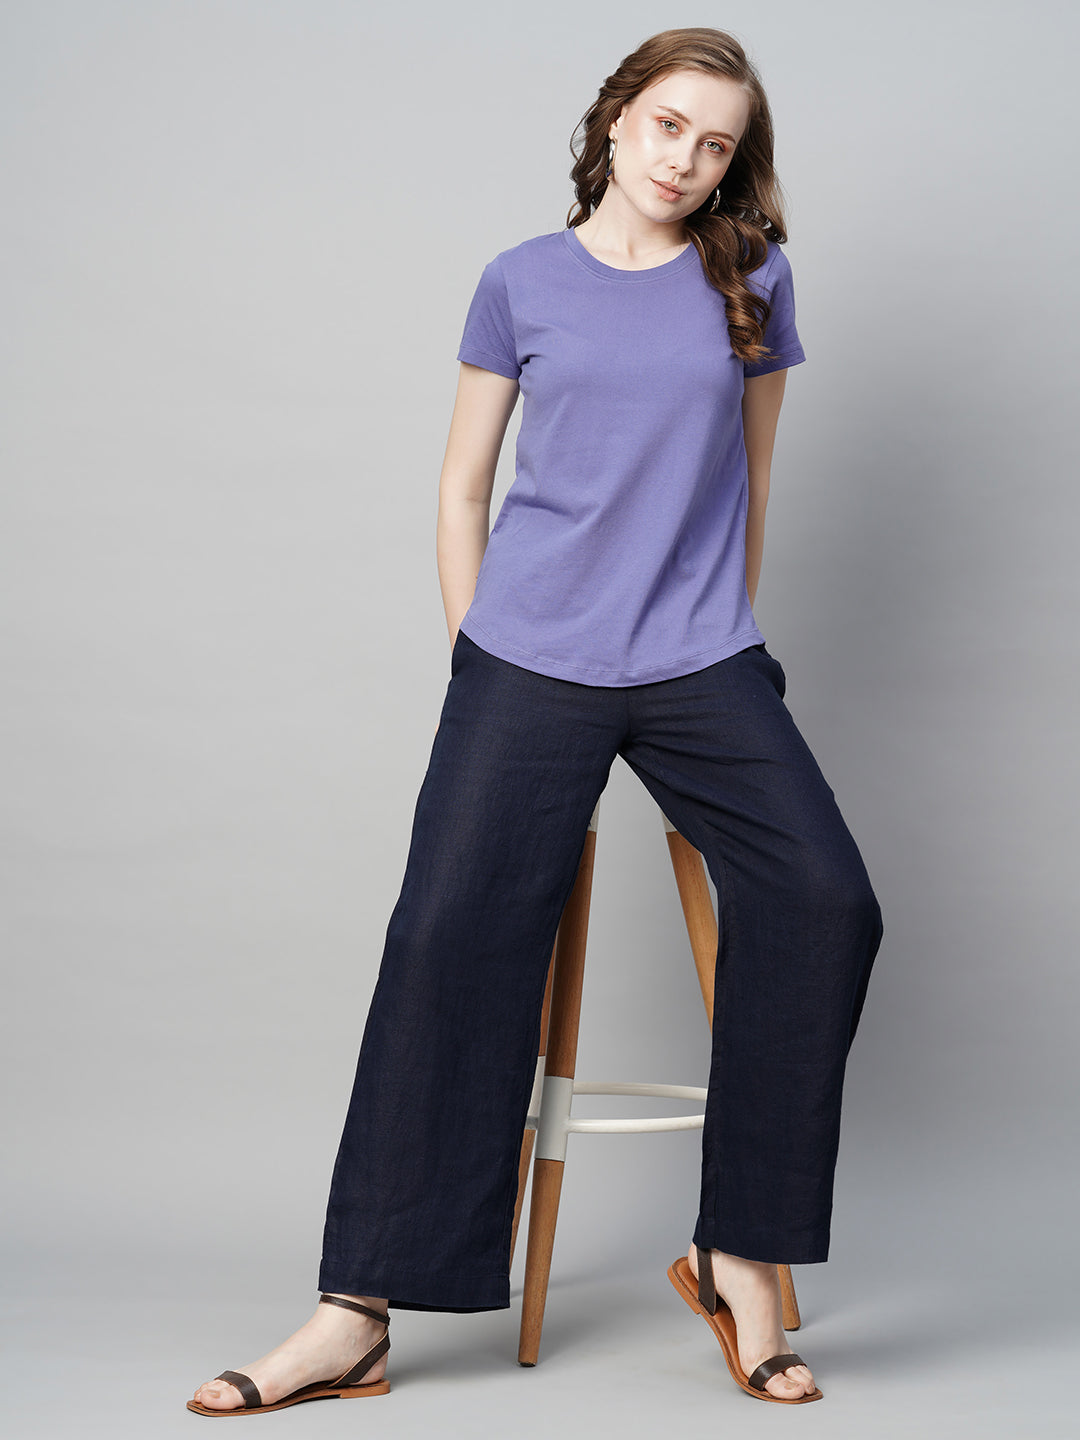 Women's Cotton Violet Regular Fit Tshirt